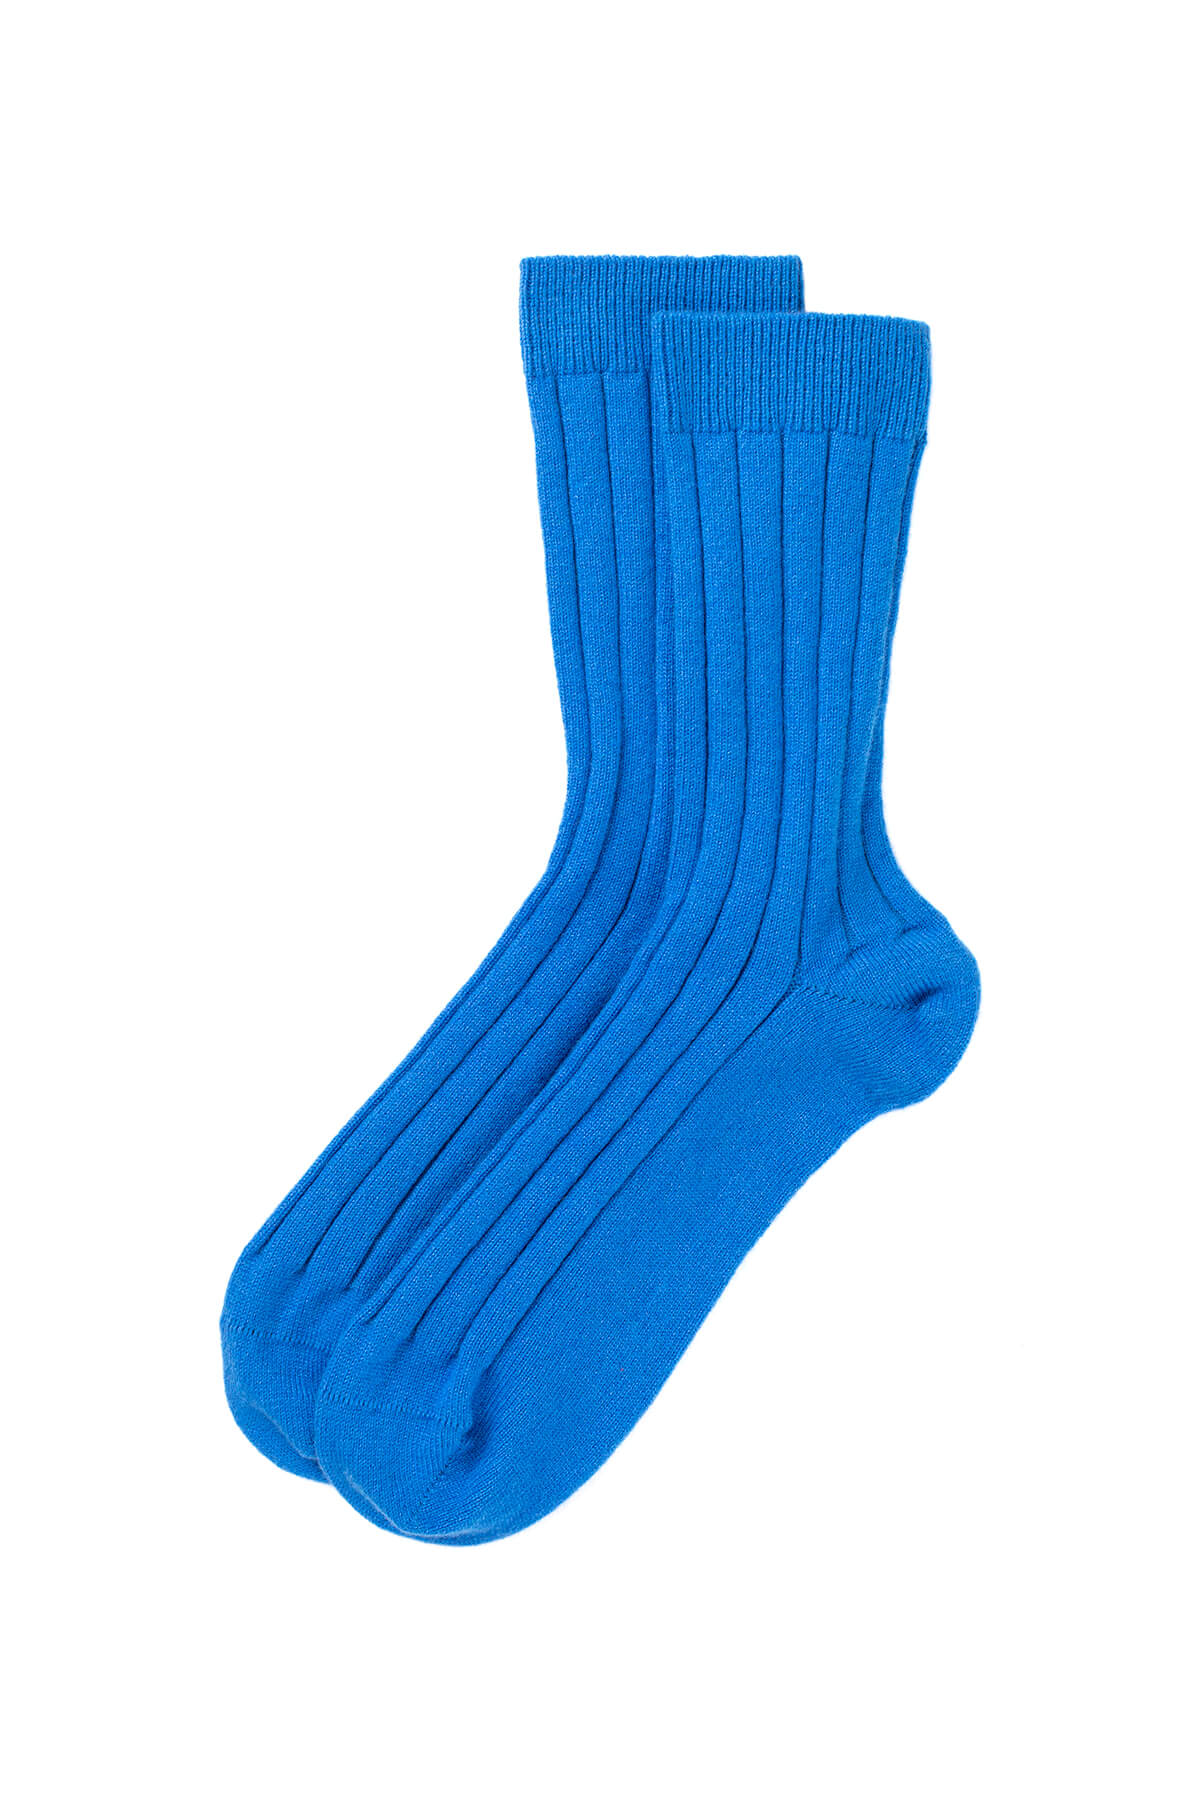 Johnstons of Elgin’s Orkney Blue Men's Cashmere Ribbed Socks on a white background HBN01009SD4991